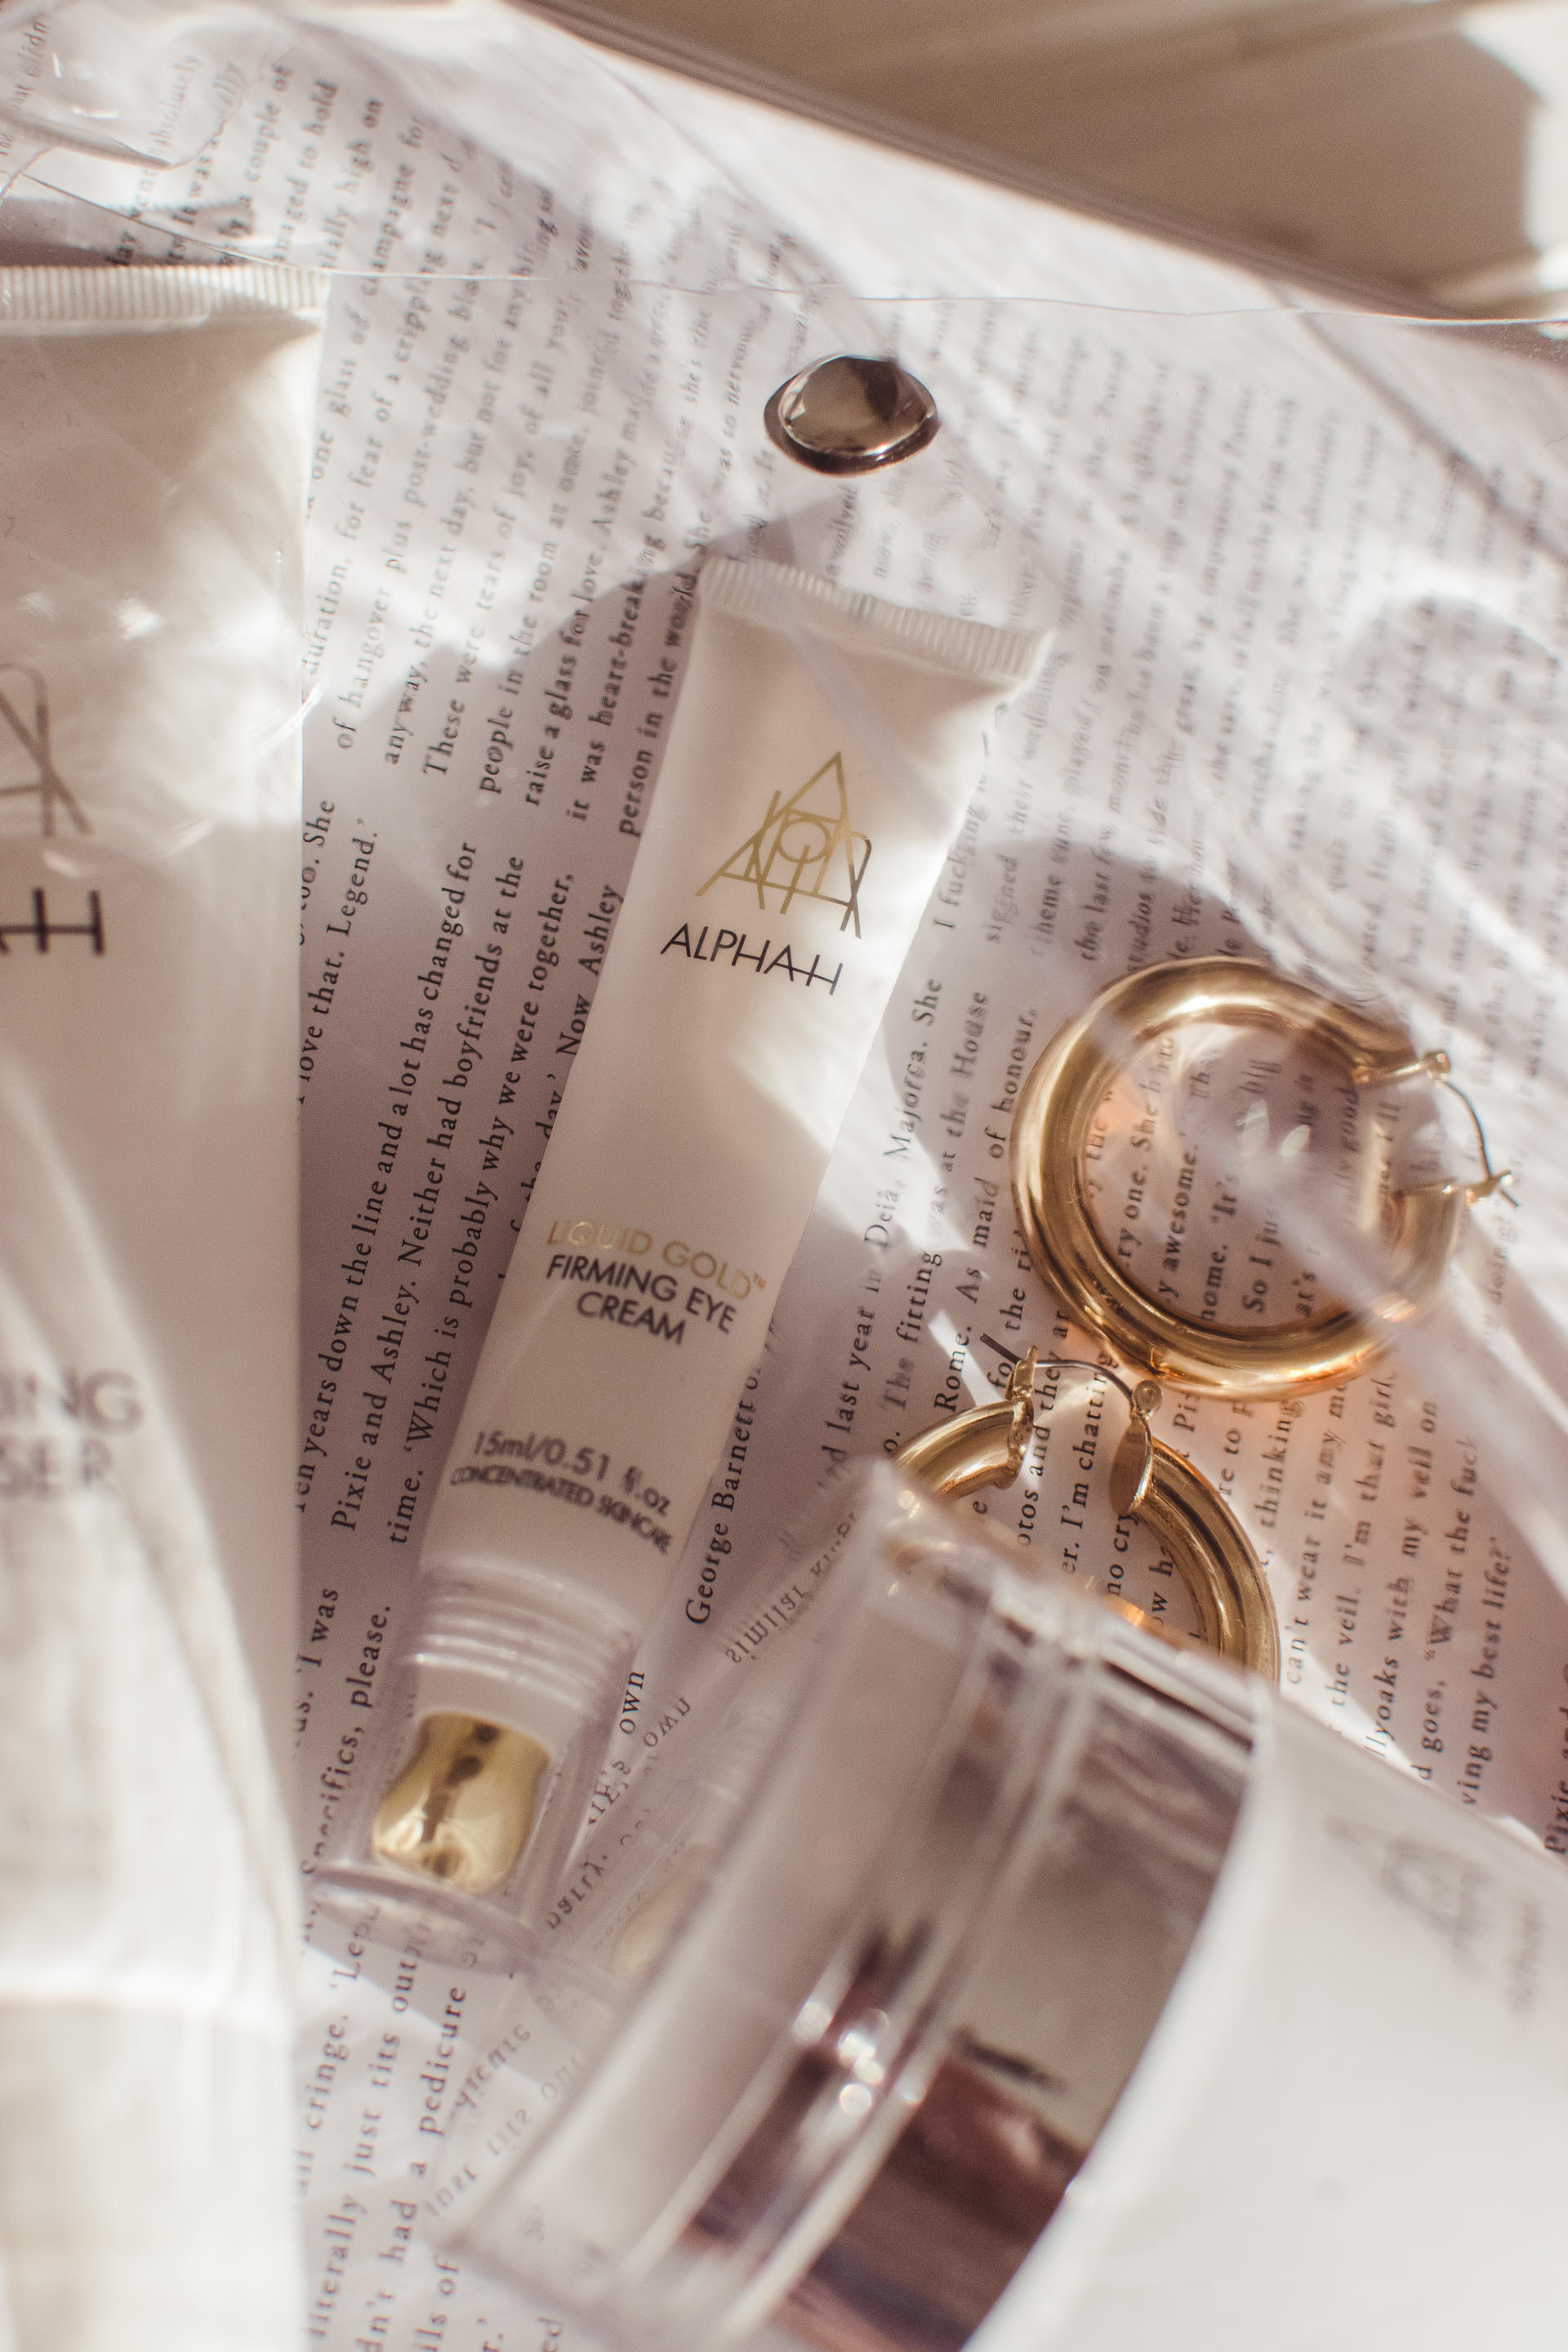 Alpha-H Liquid Gold Firming Eye Cream﻿ Review